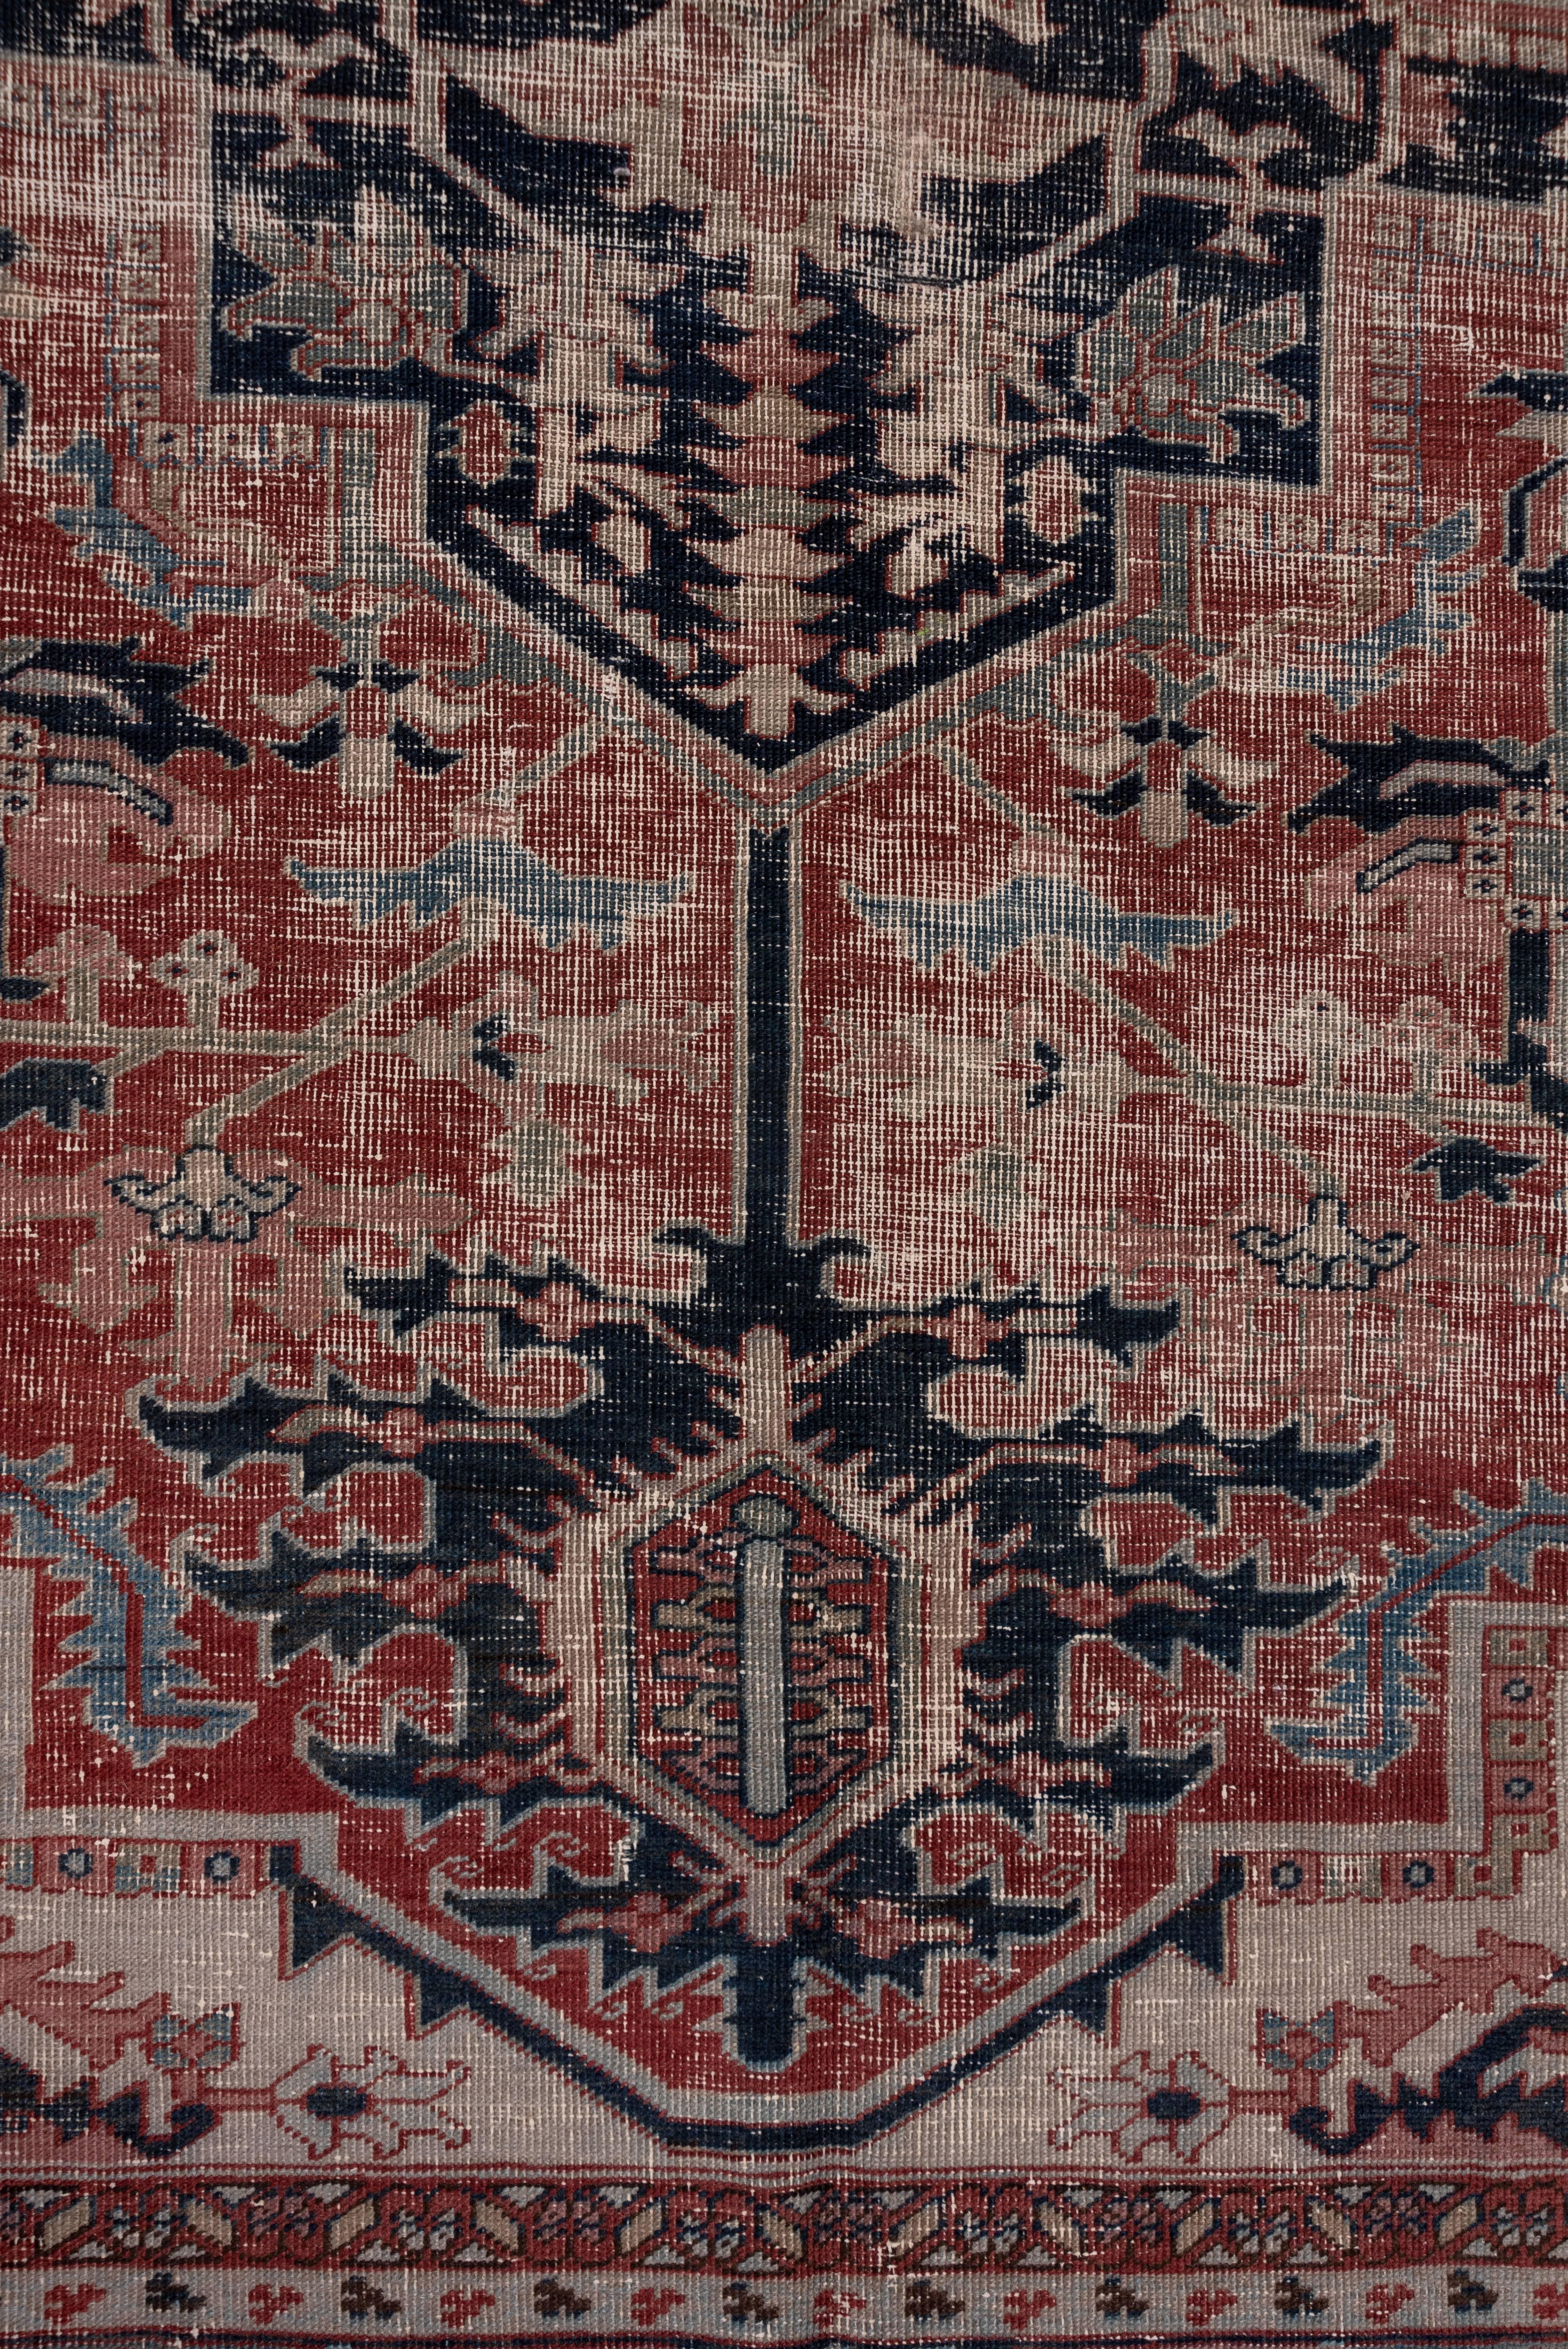 Wool Antique Persian Heriz Carpet, Shabby Chic